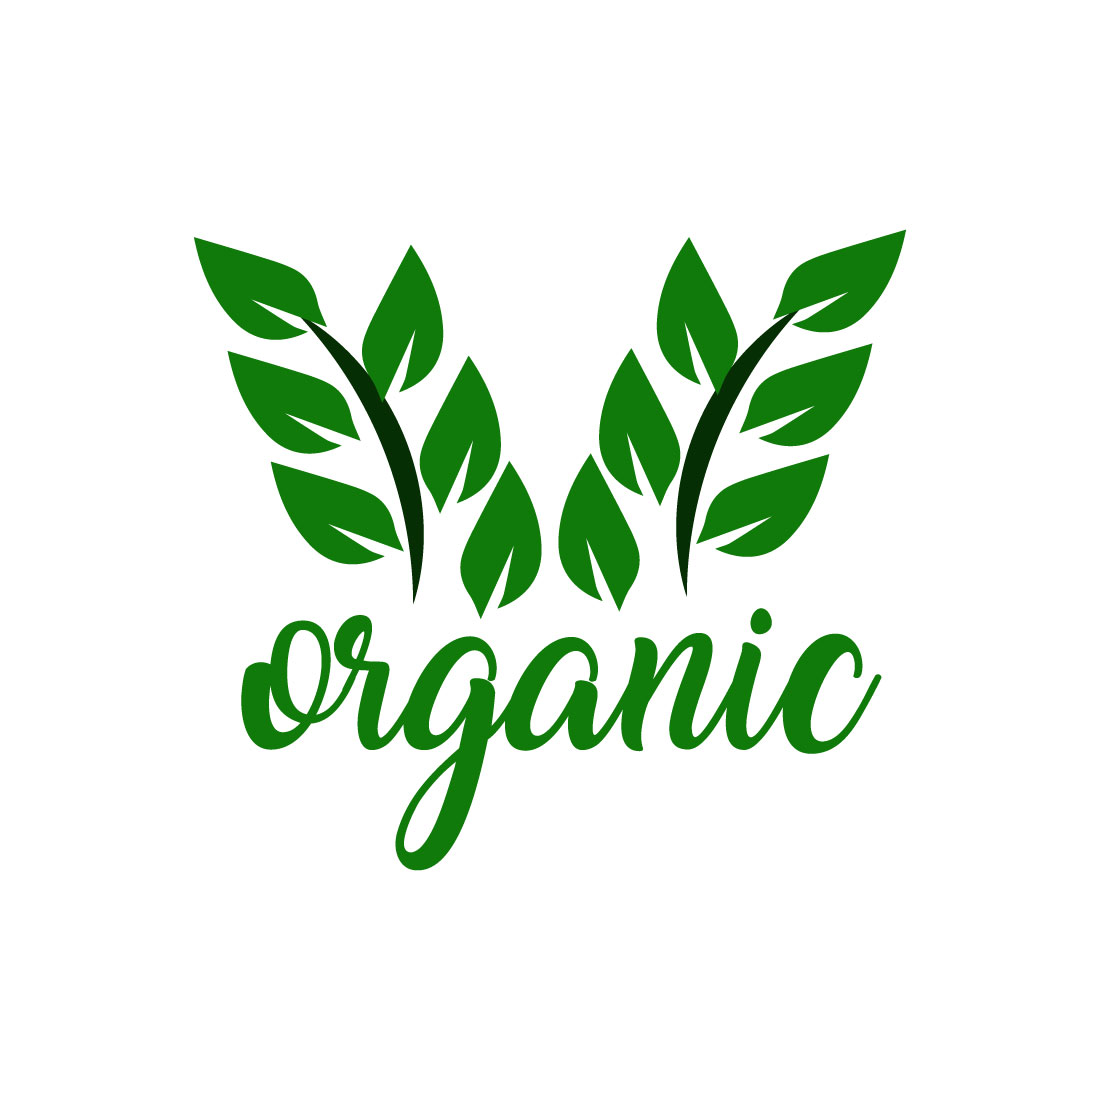 Free Biodiversity organic logo preview image.